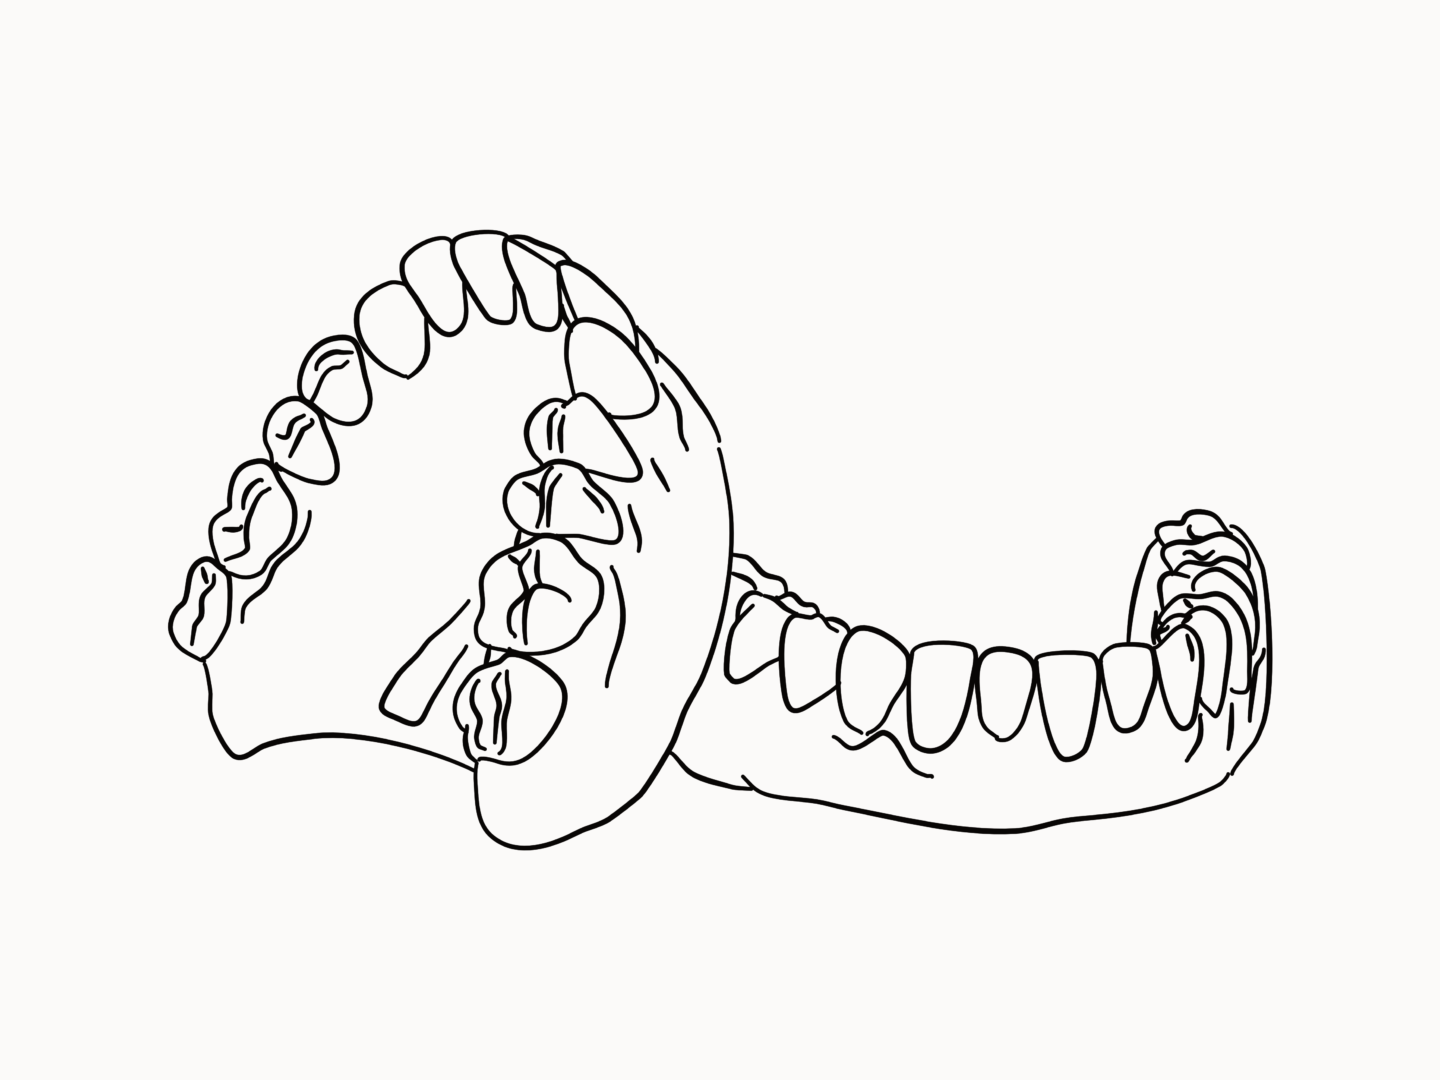 Dentures illustration